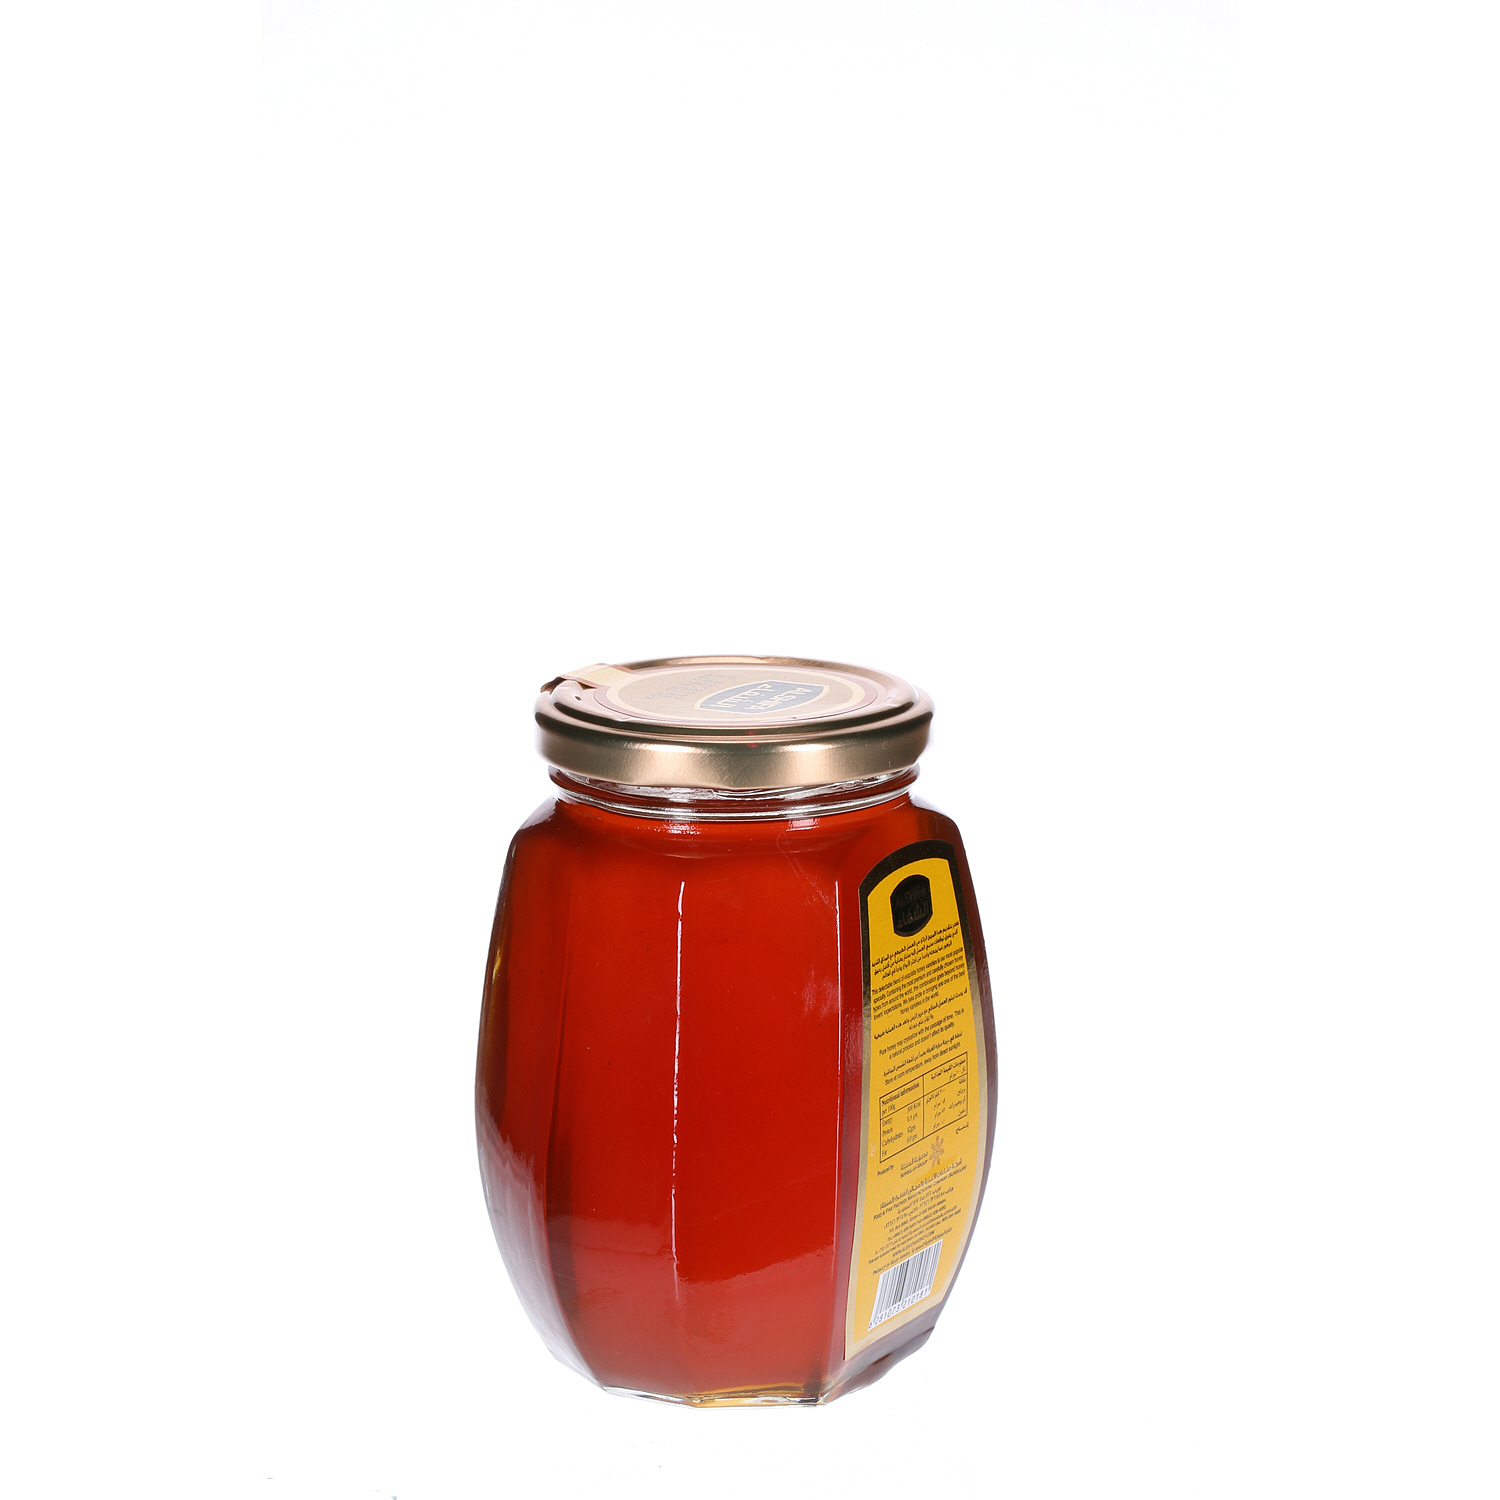 Al Shifa Natural Honey 500 g